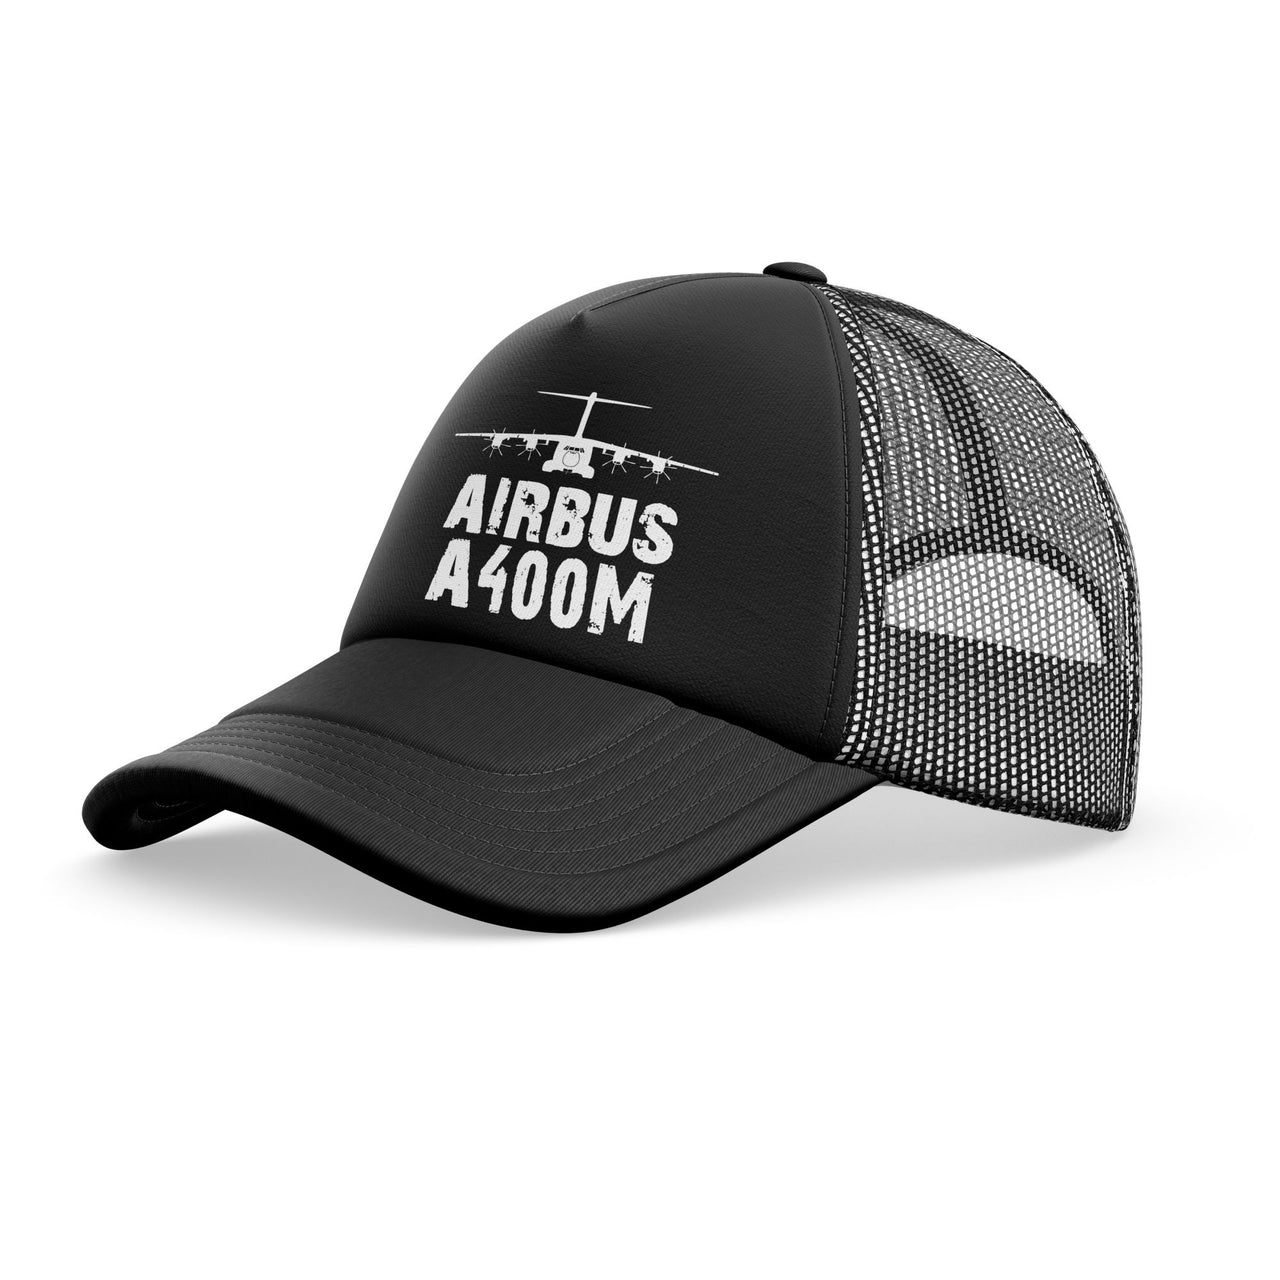 Airbus A400M & Plane Designed Trucker Caps & Hats